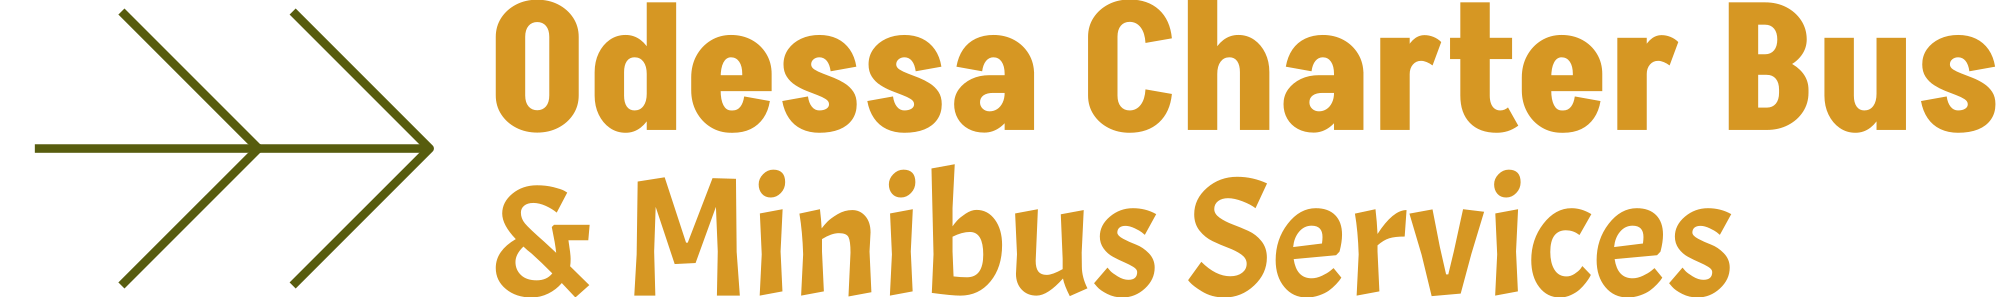 Charter Bus Company Odessa logo